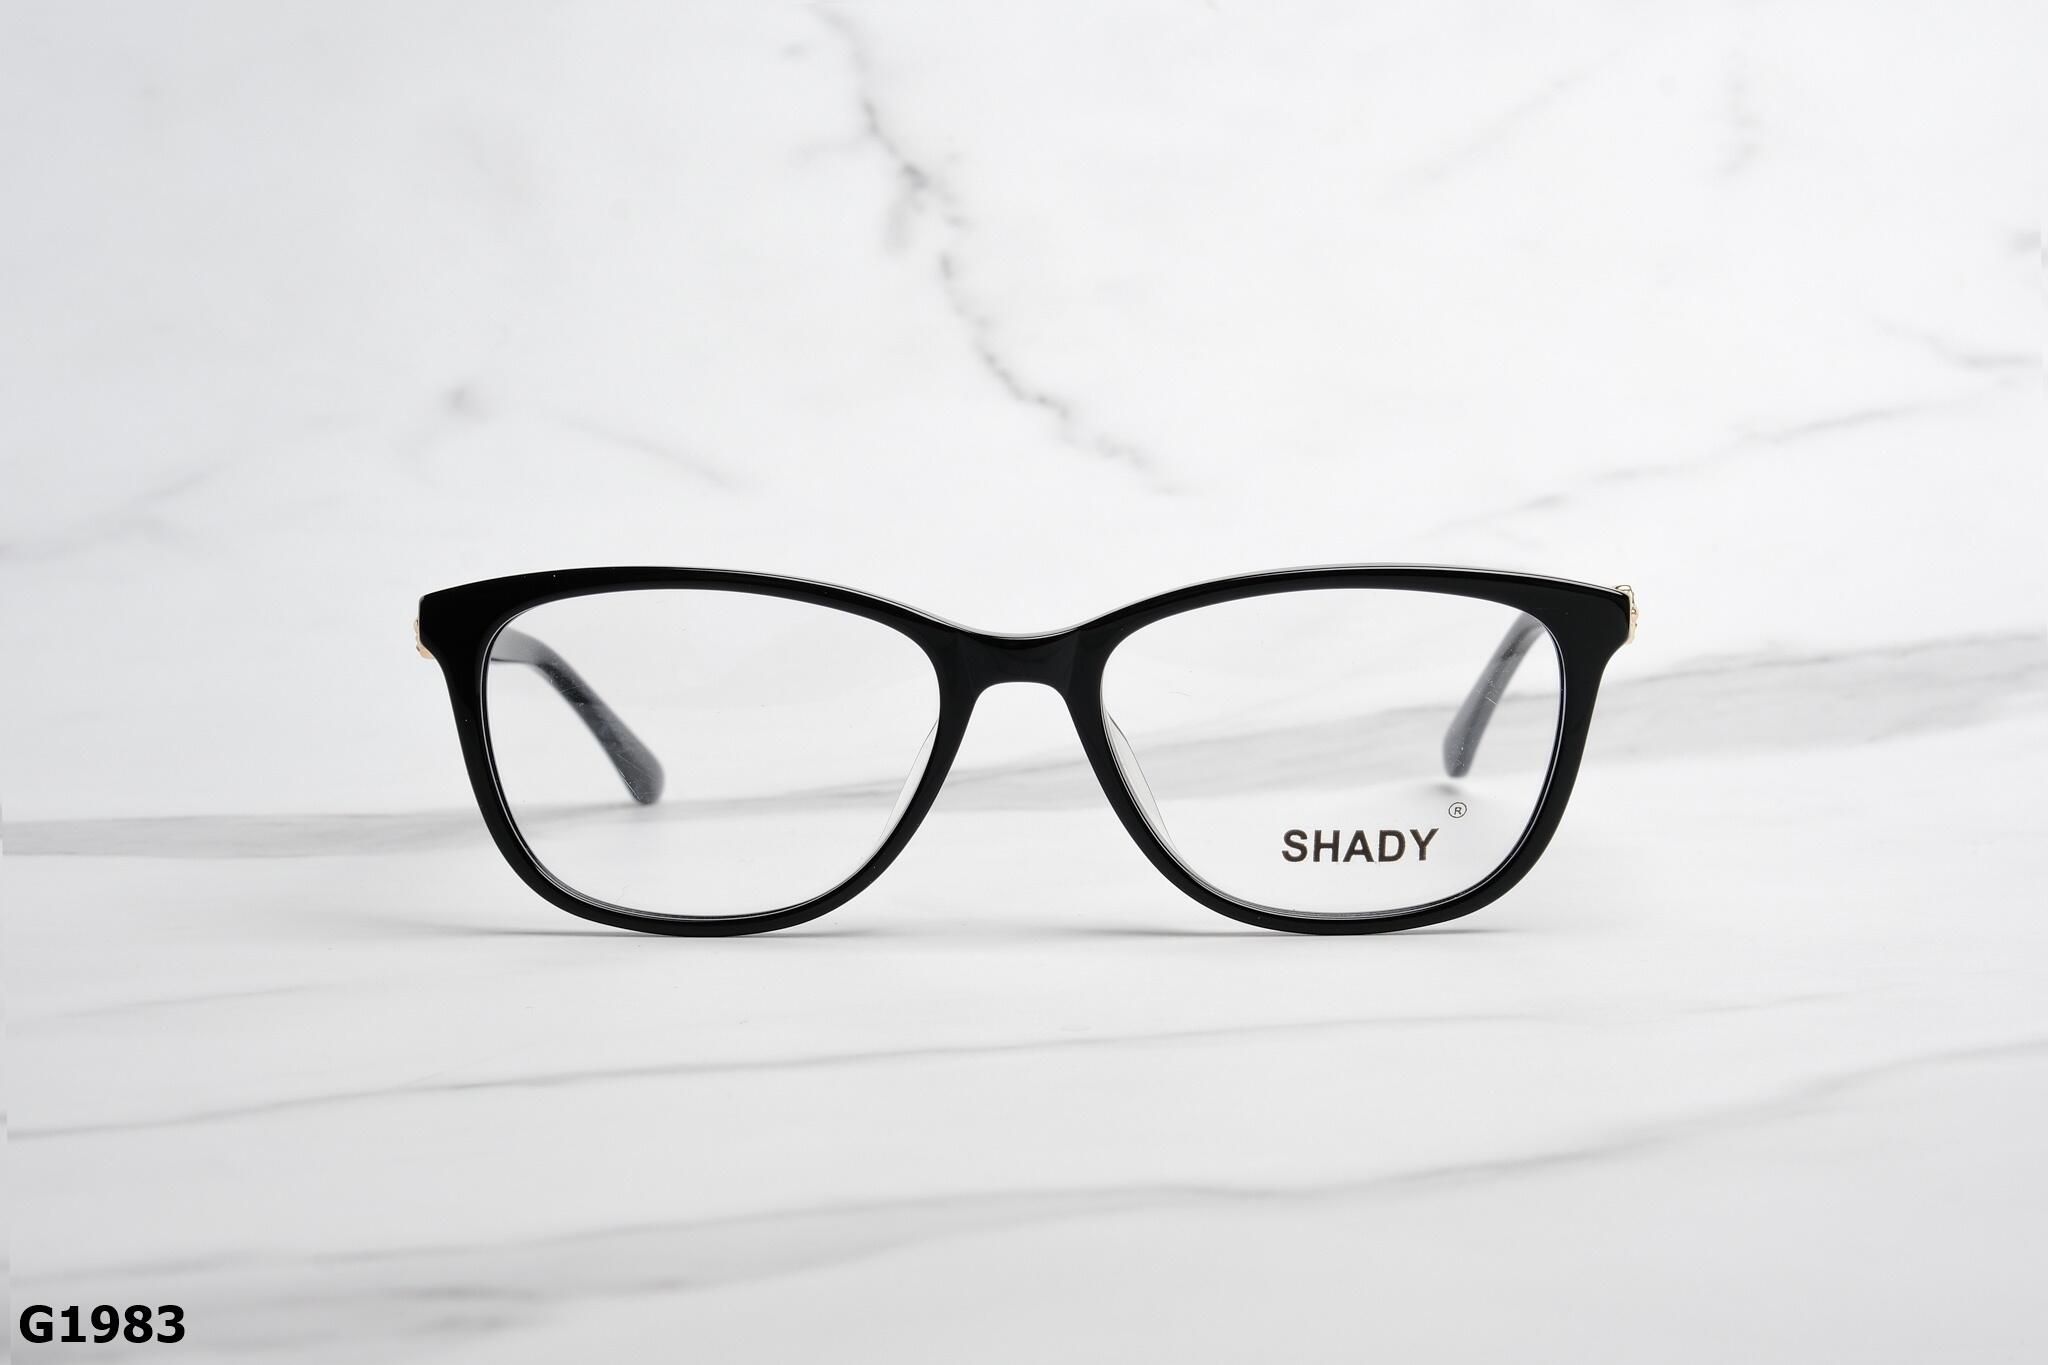  SHADY Eyewear - Glasses - G1983 